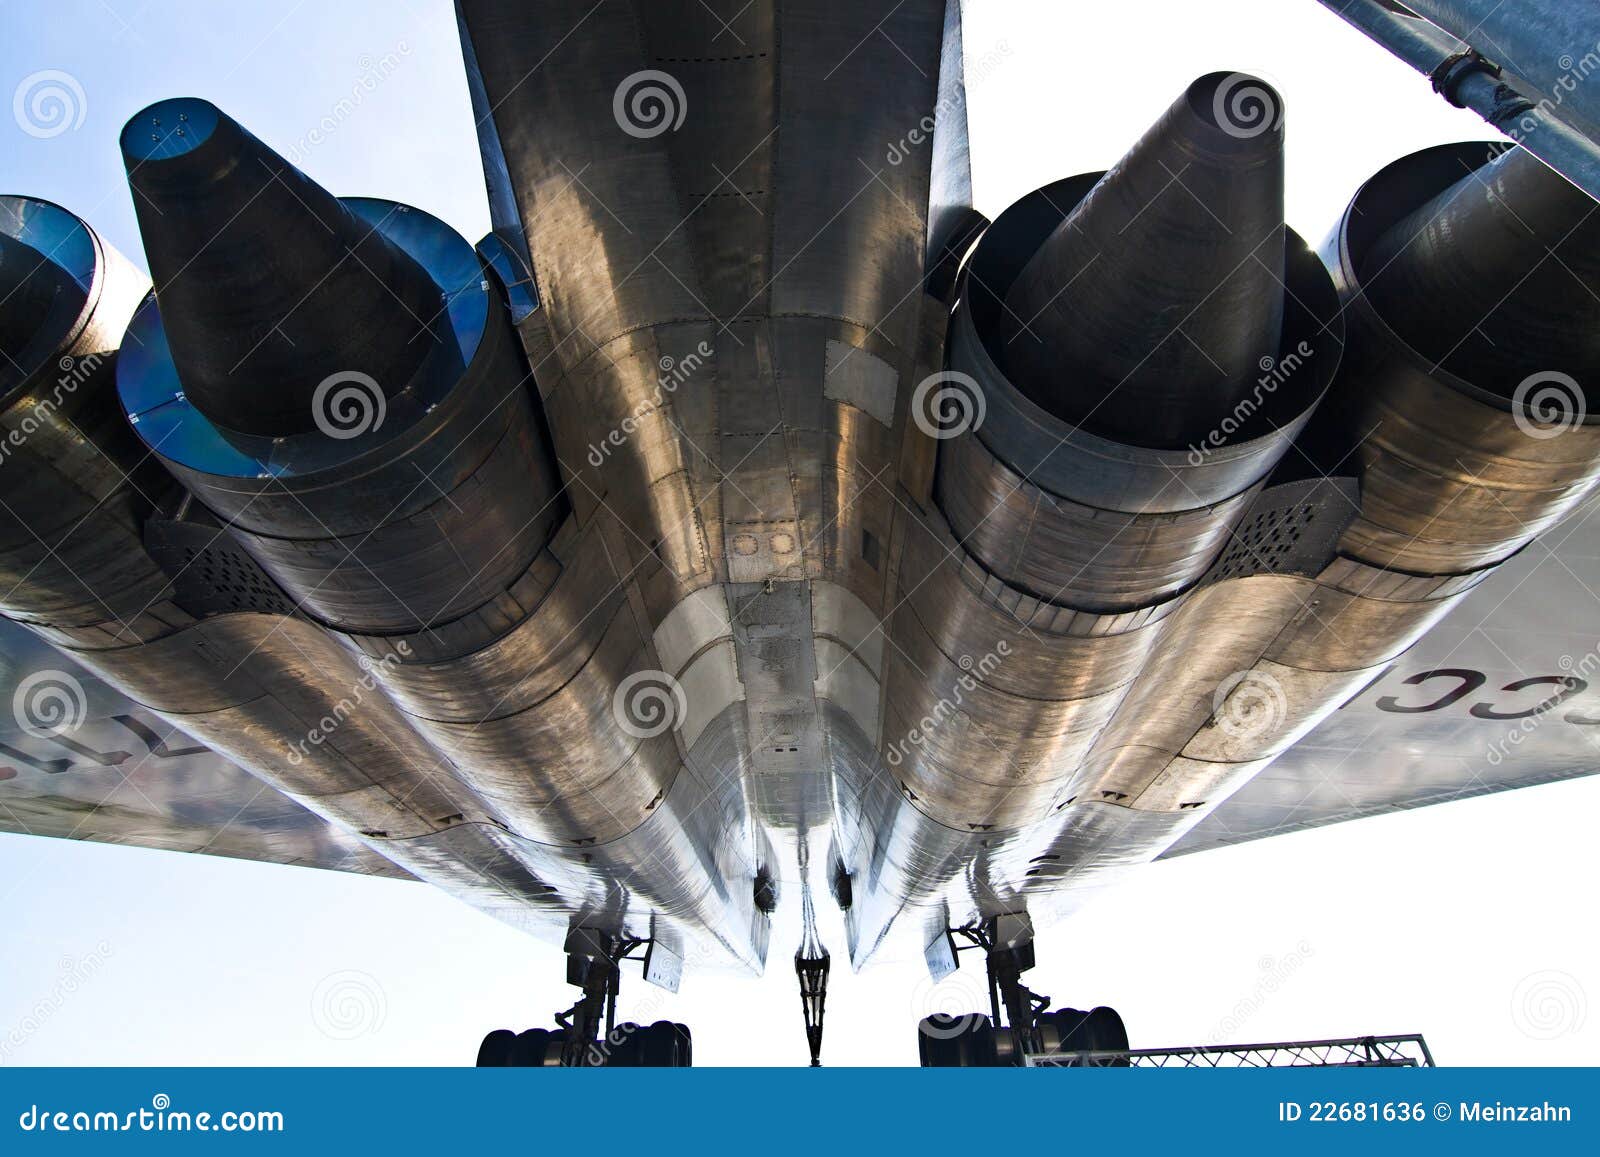 supersonic aircraft tupolev tu-144